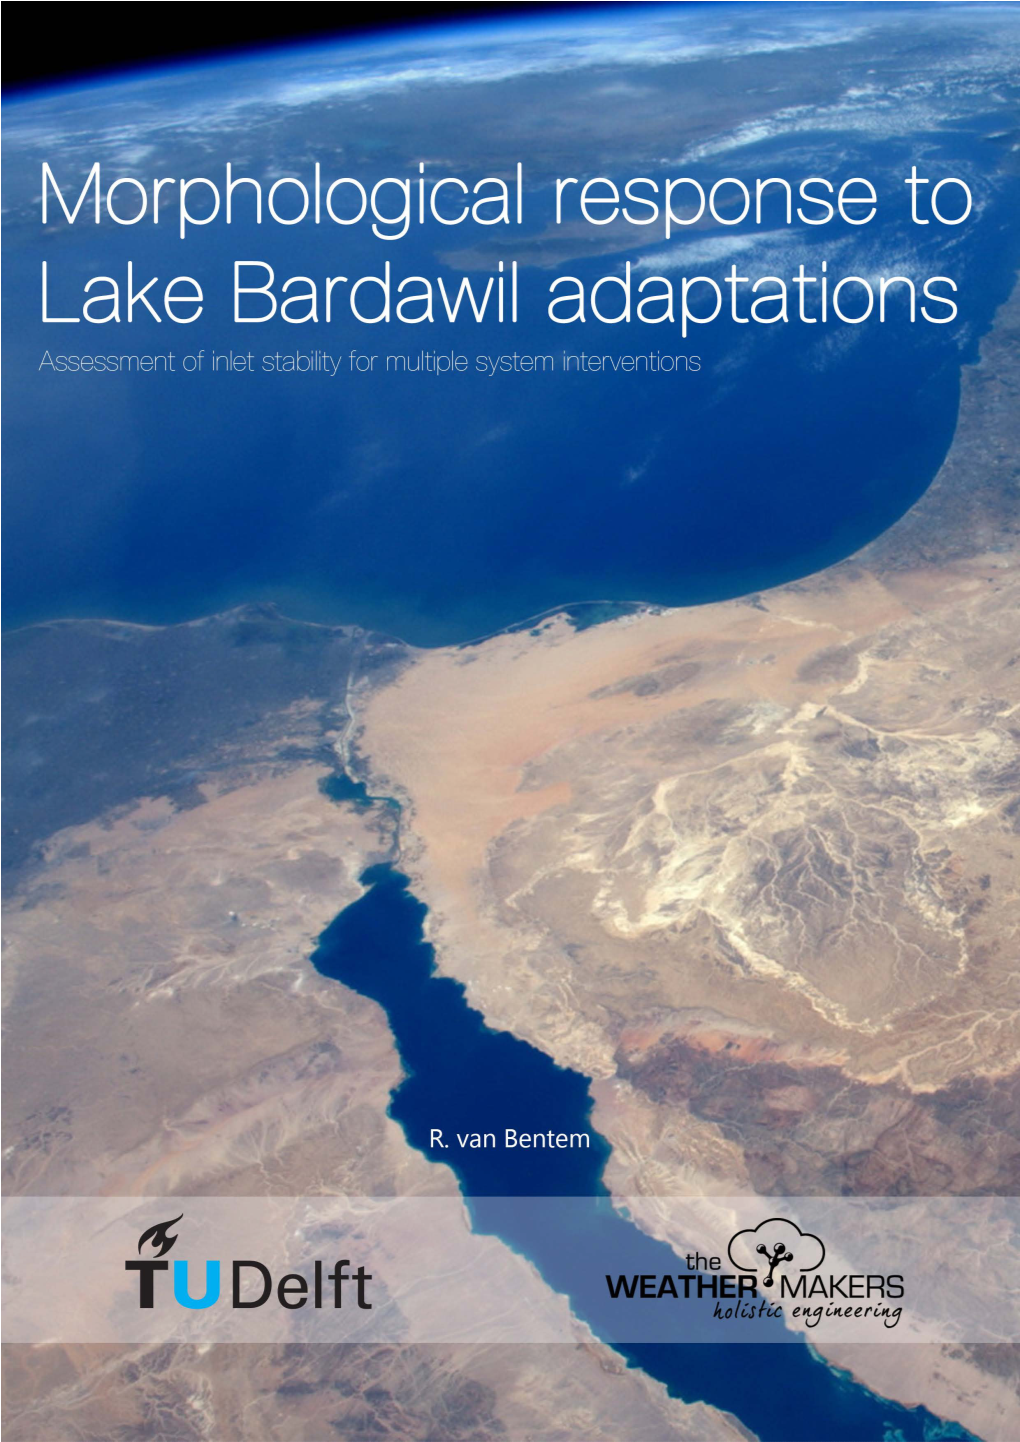 Morphological Response to Lake Bardawil Adaptations (2020)